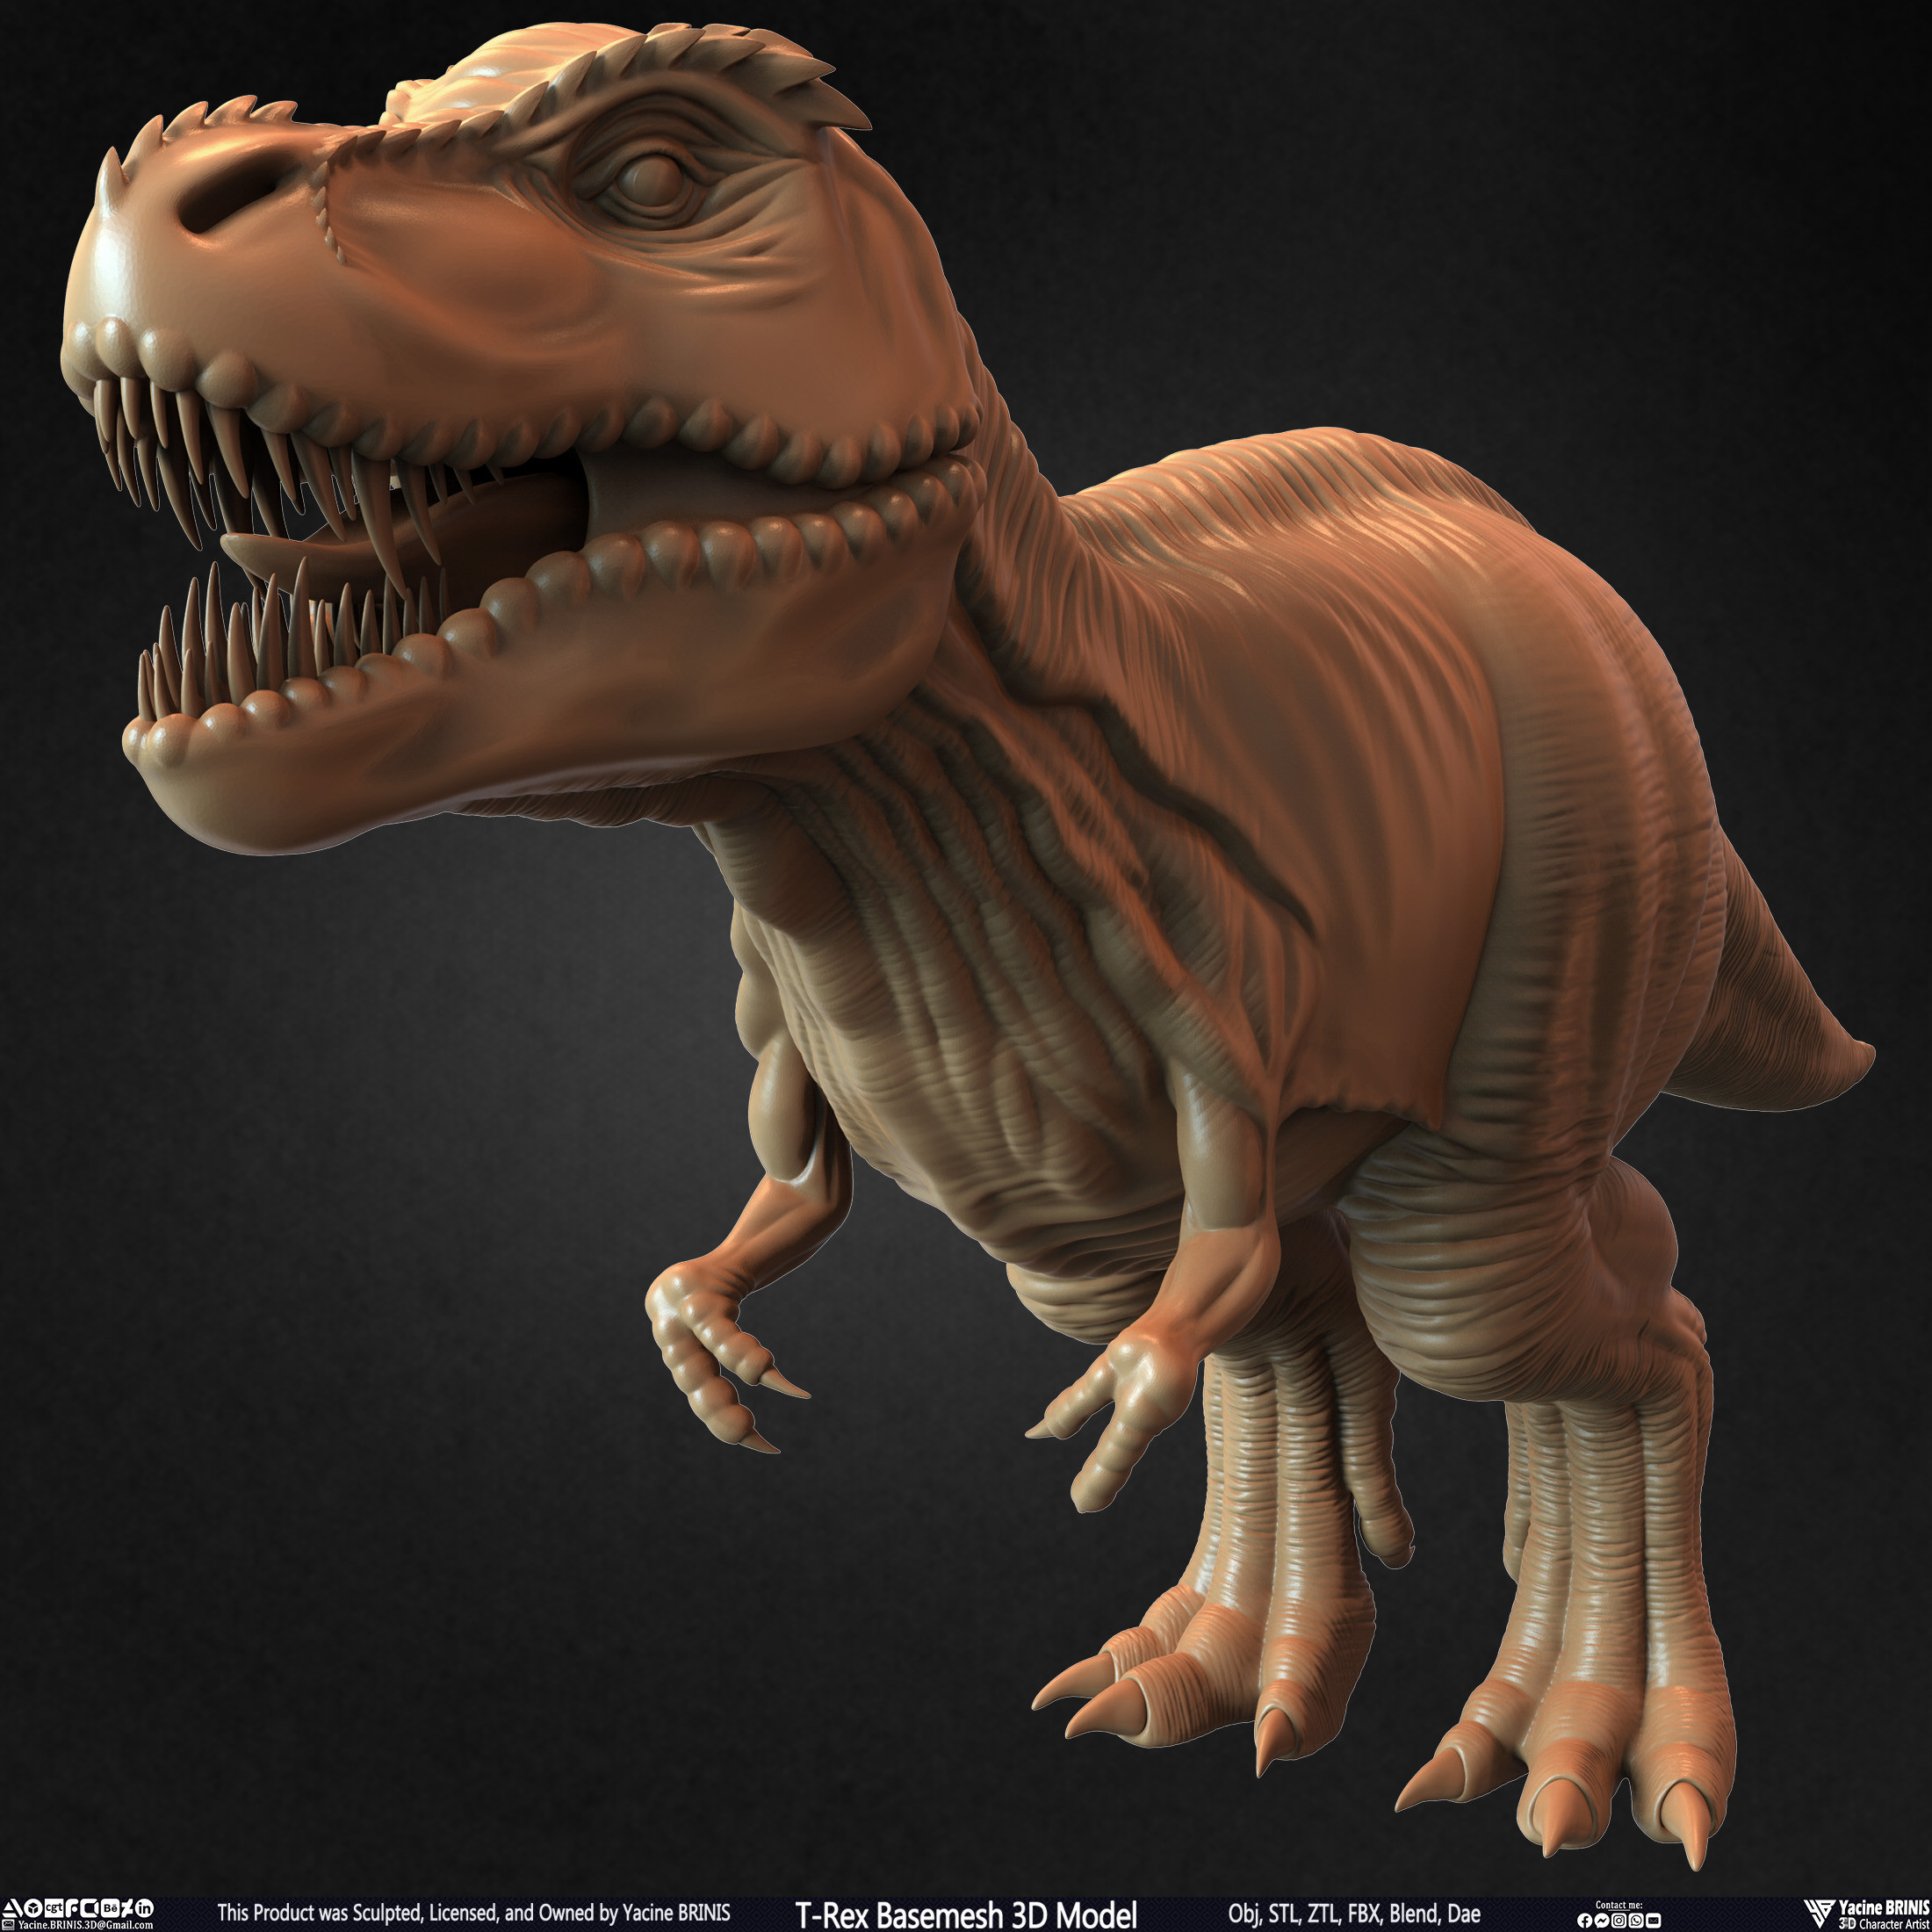 T-Rex Basemesh 3D Model (Tyrannosaurus Rex) Sculpted By Yacine BRINIS Set 011